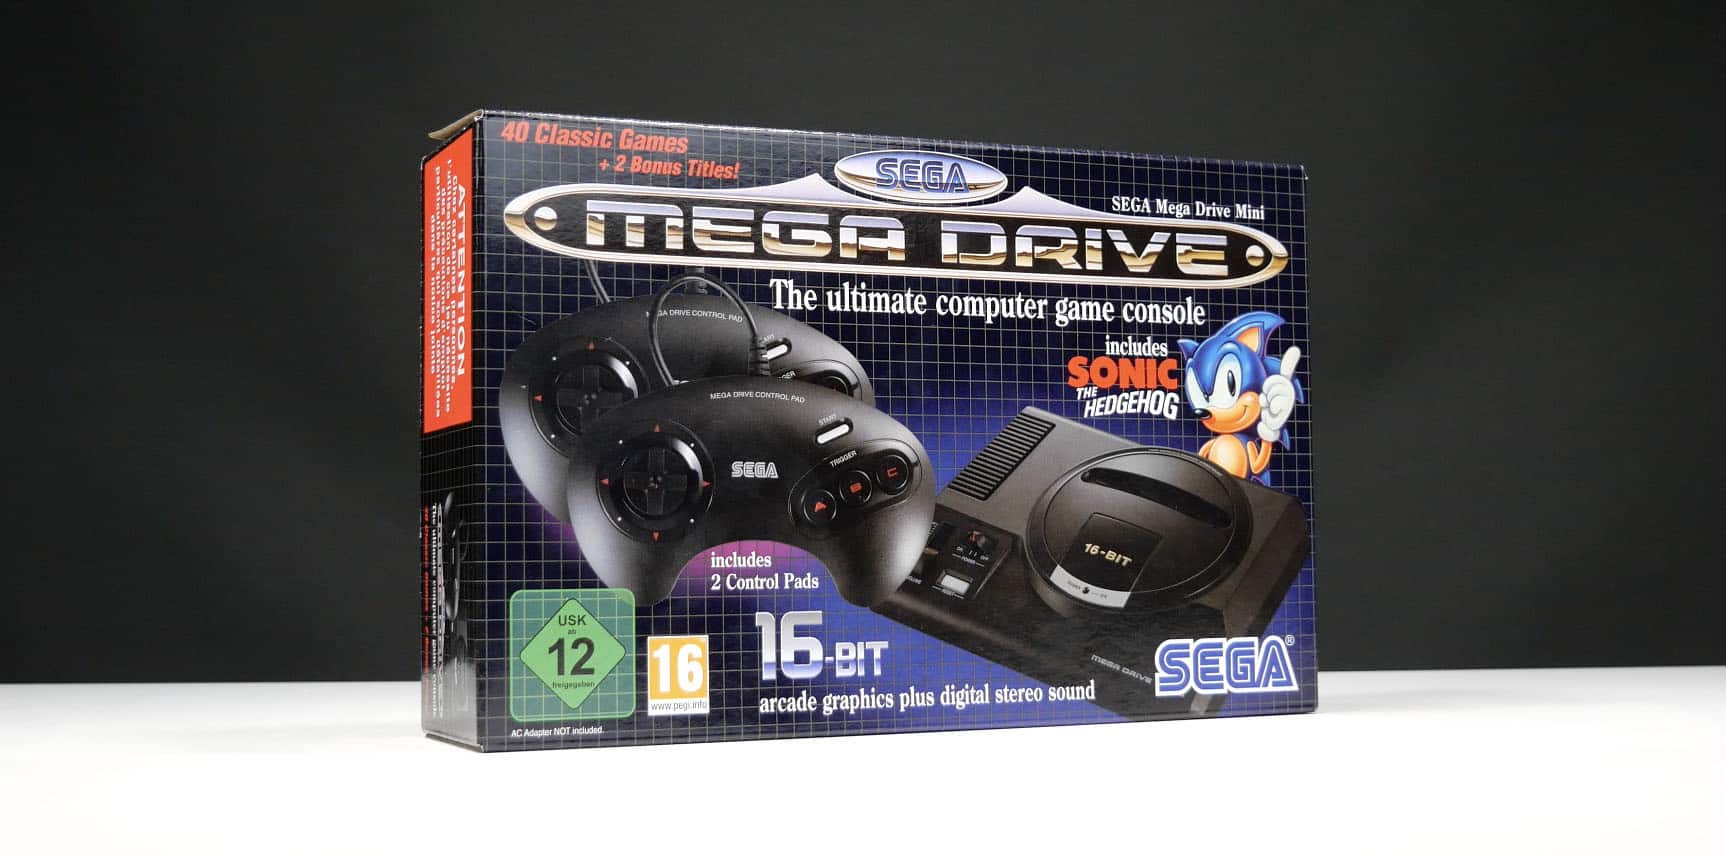 Sega Genesis Mini review (for non-nostalgic newcomers)